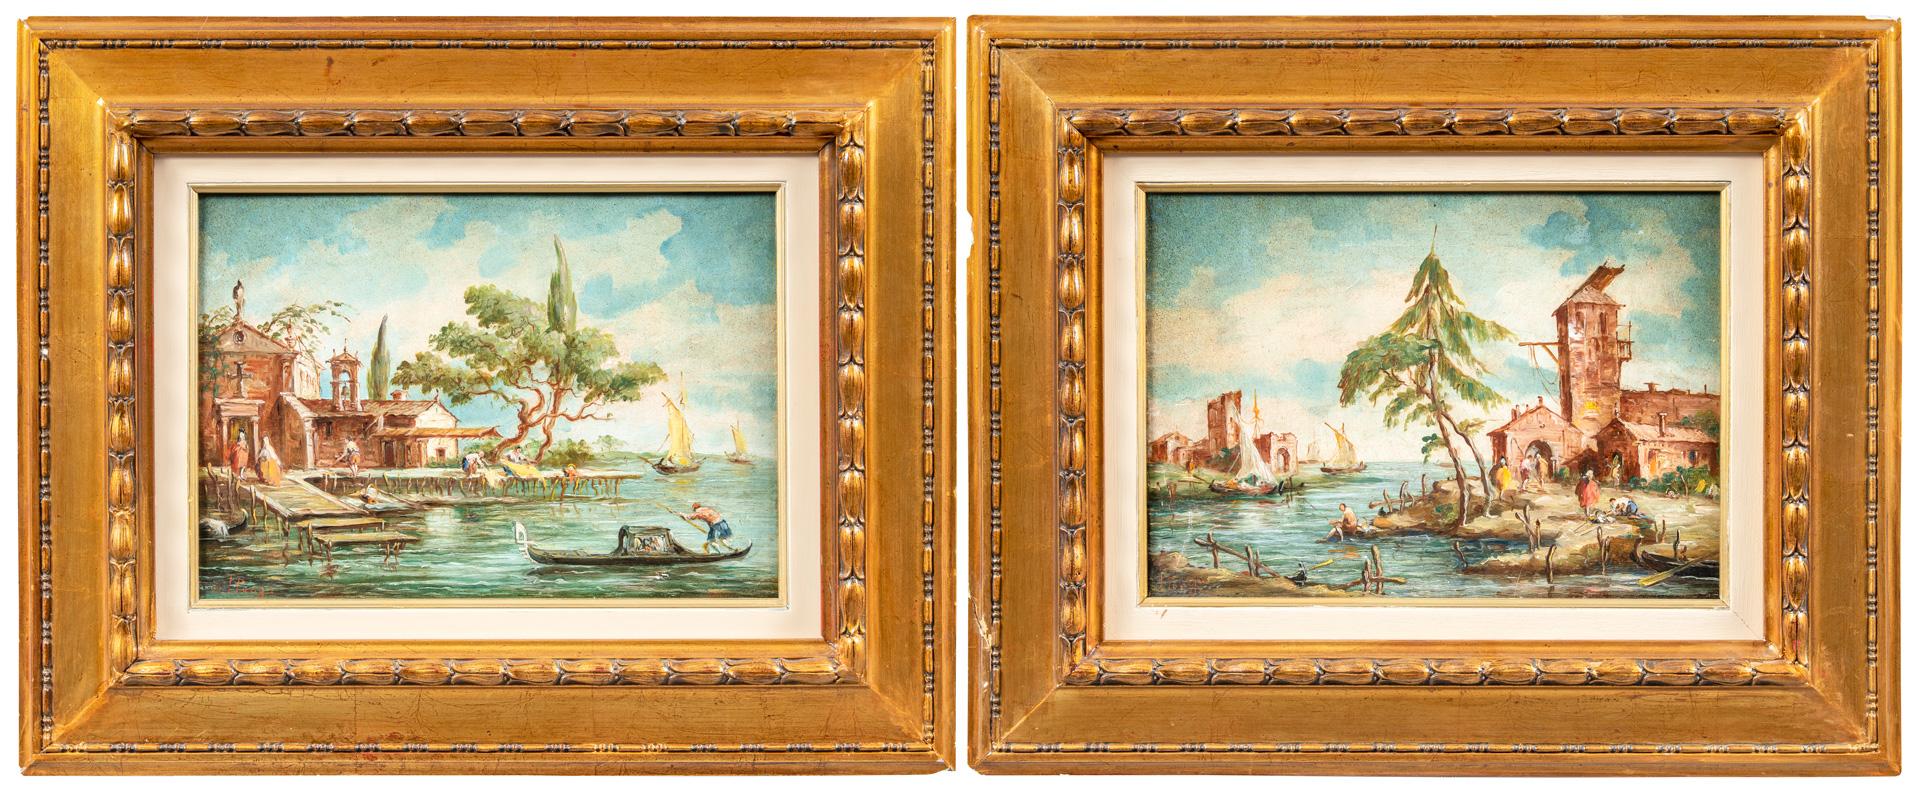 Lucia Ponga (Venice) - Pair of 19th century landscape paintings - Venice view 